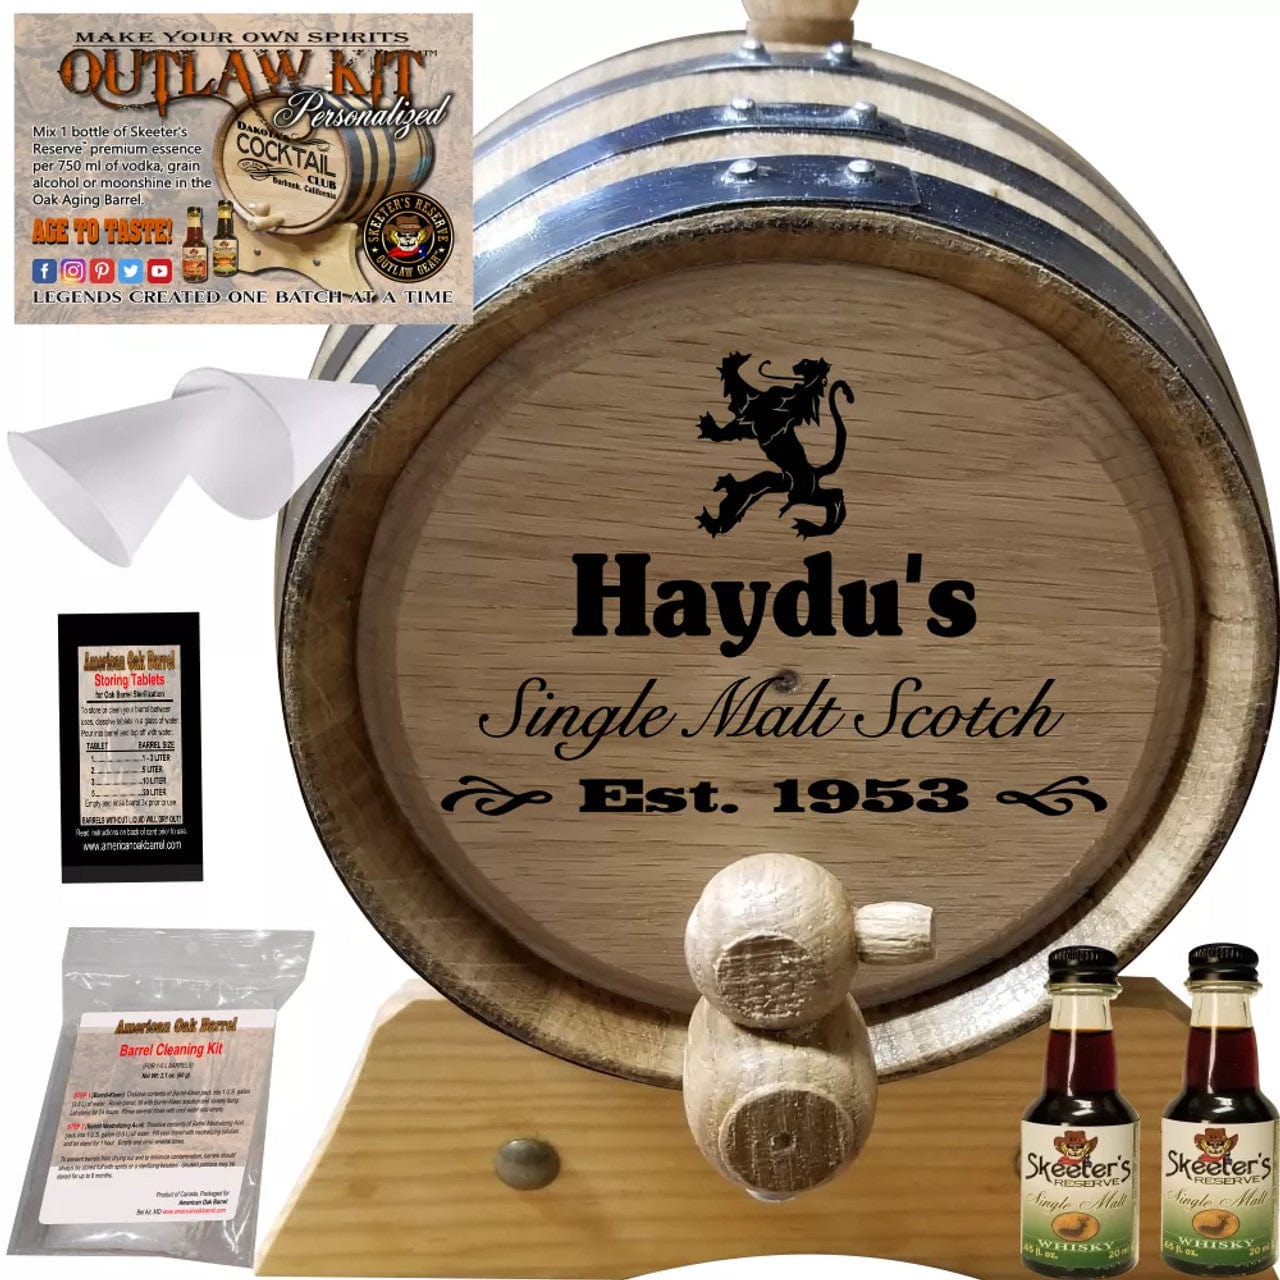 American Oak Barrel Outlaw Kits 1 Liter (.26 gallon) / Cherry Bourbon American Oak Barrel Personalized Outlaw Kit™ (020) Single Malt Scotch - Create Your Own Spirits